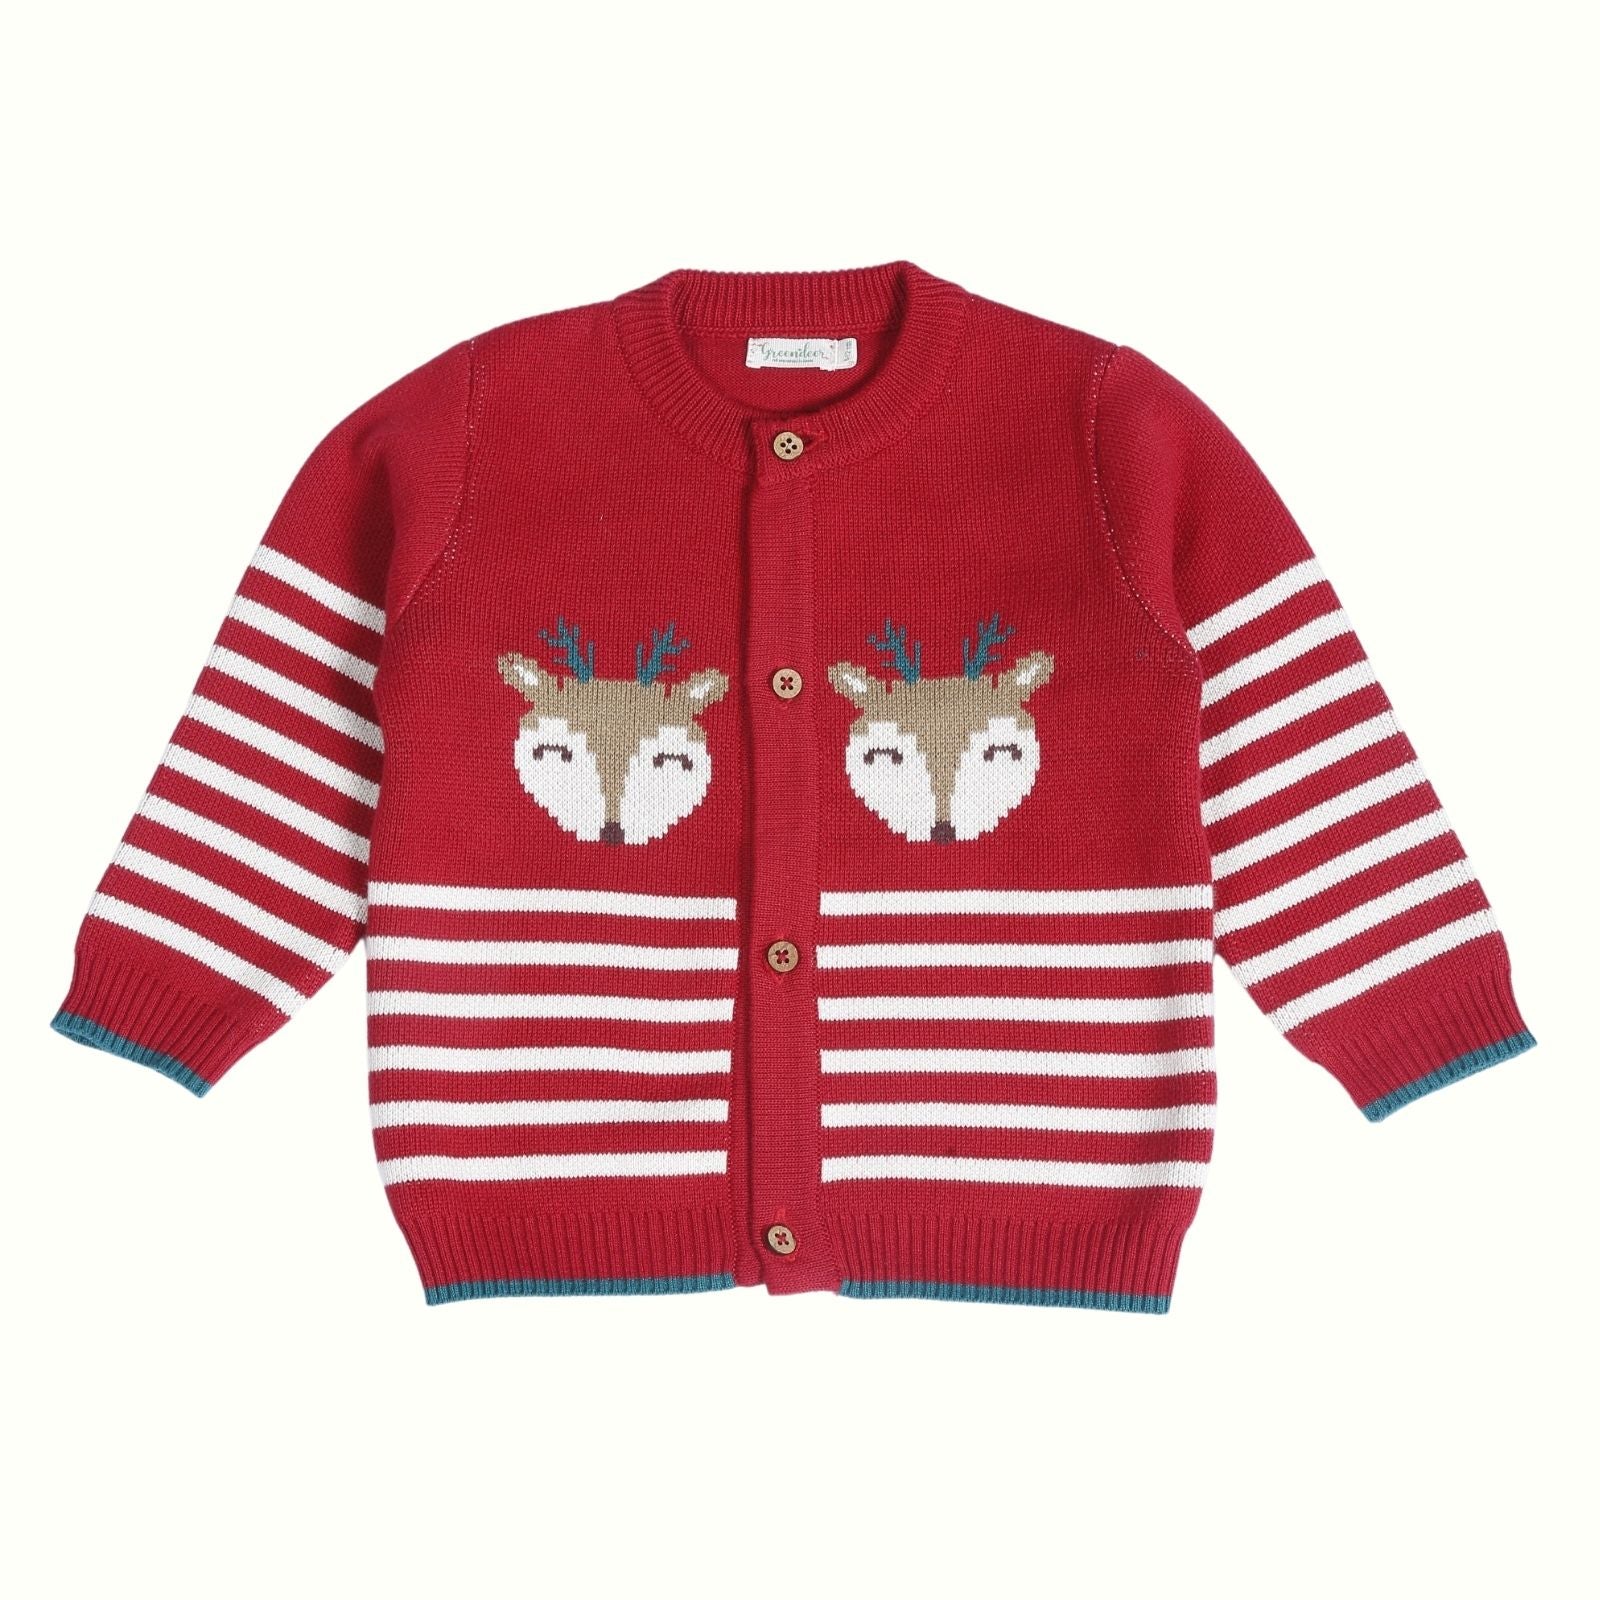 Copy of Greendeer Jaunty Reindeer & Joyful Reindeer 100% Cotton Sweater with Red Lower Set of 3